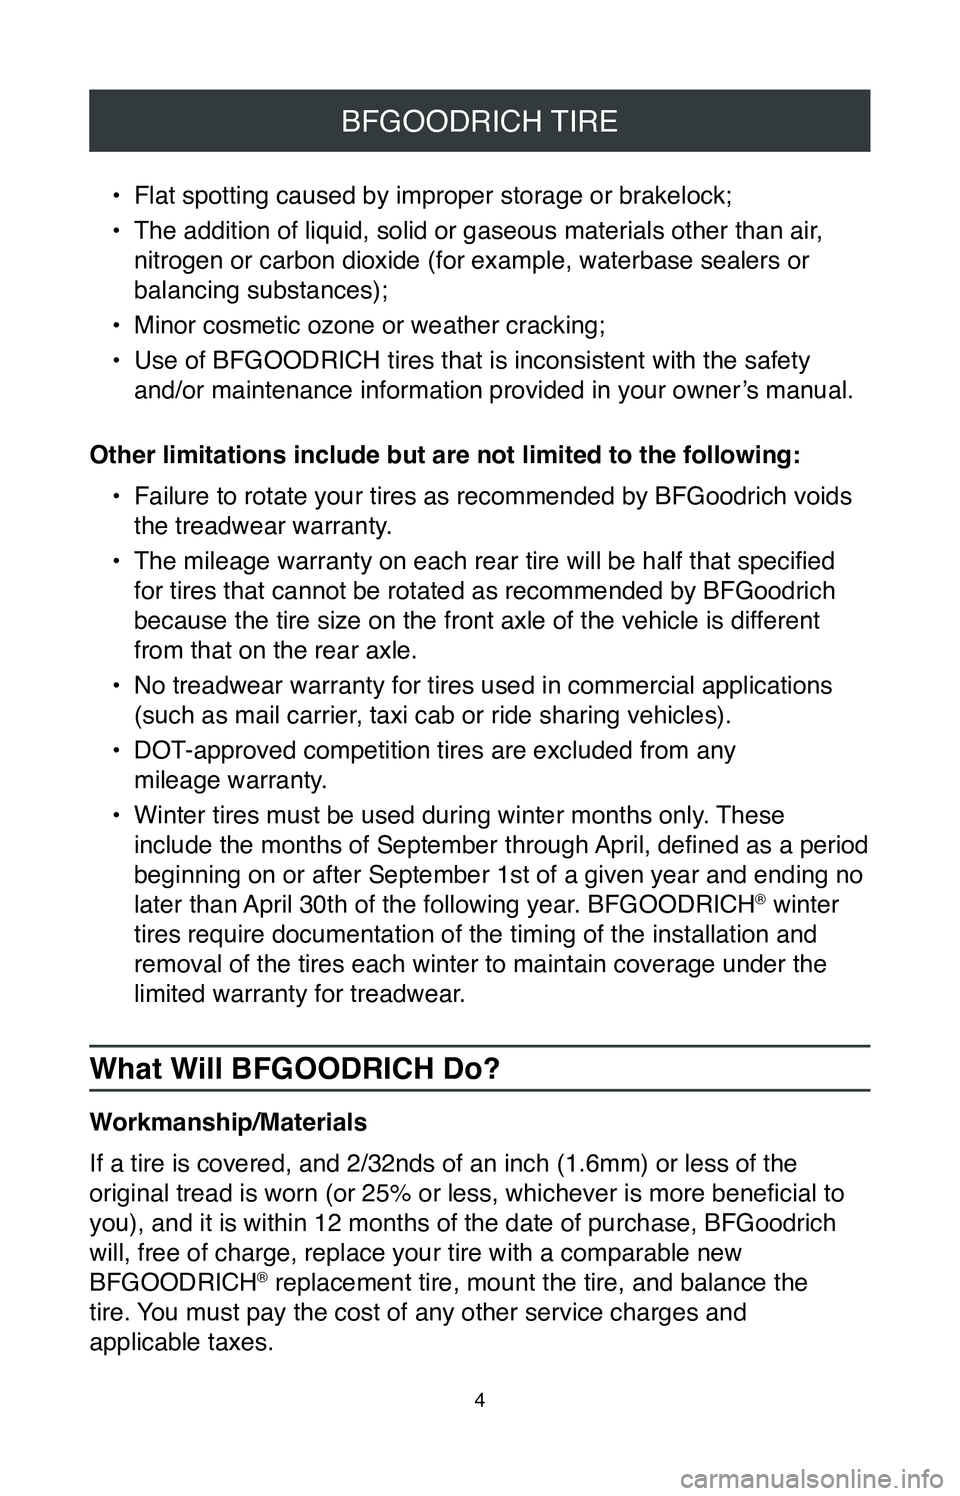 TOYOTA HIGHLANDER 2020  Warranties & Maintenance Guides (in English) 4
BFGOODRICH TIRE
